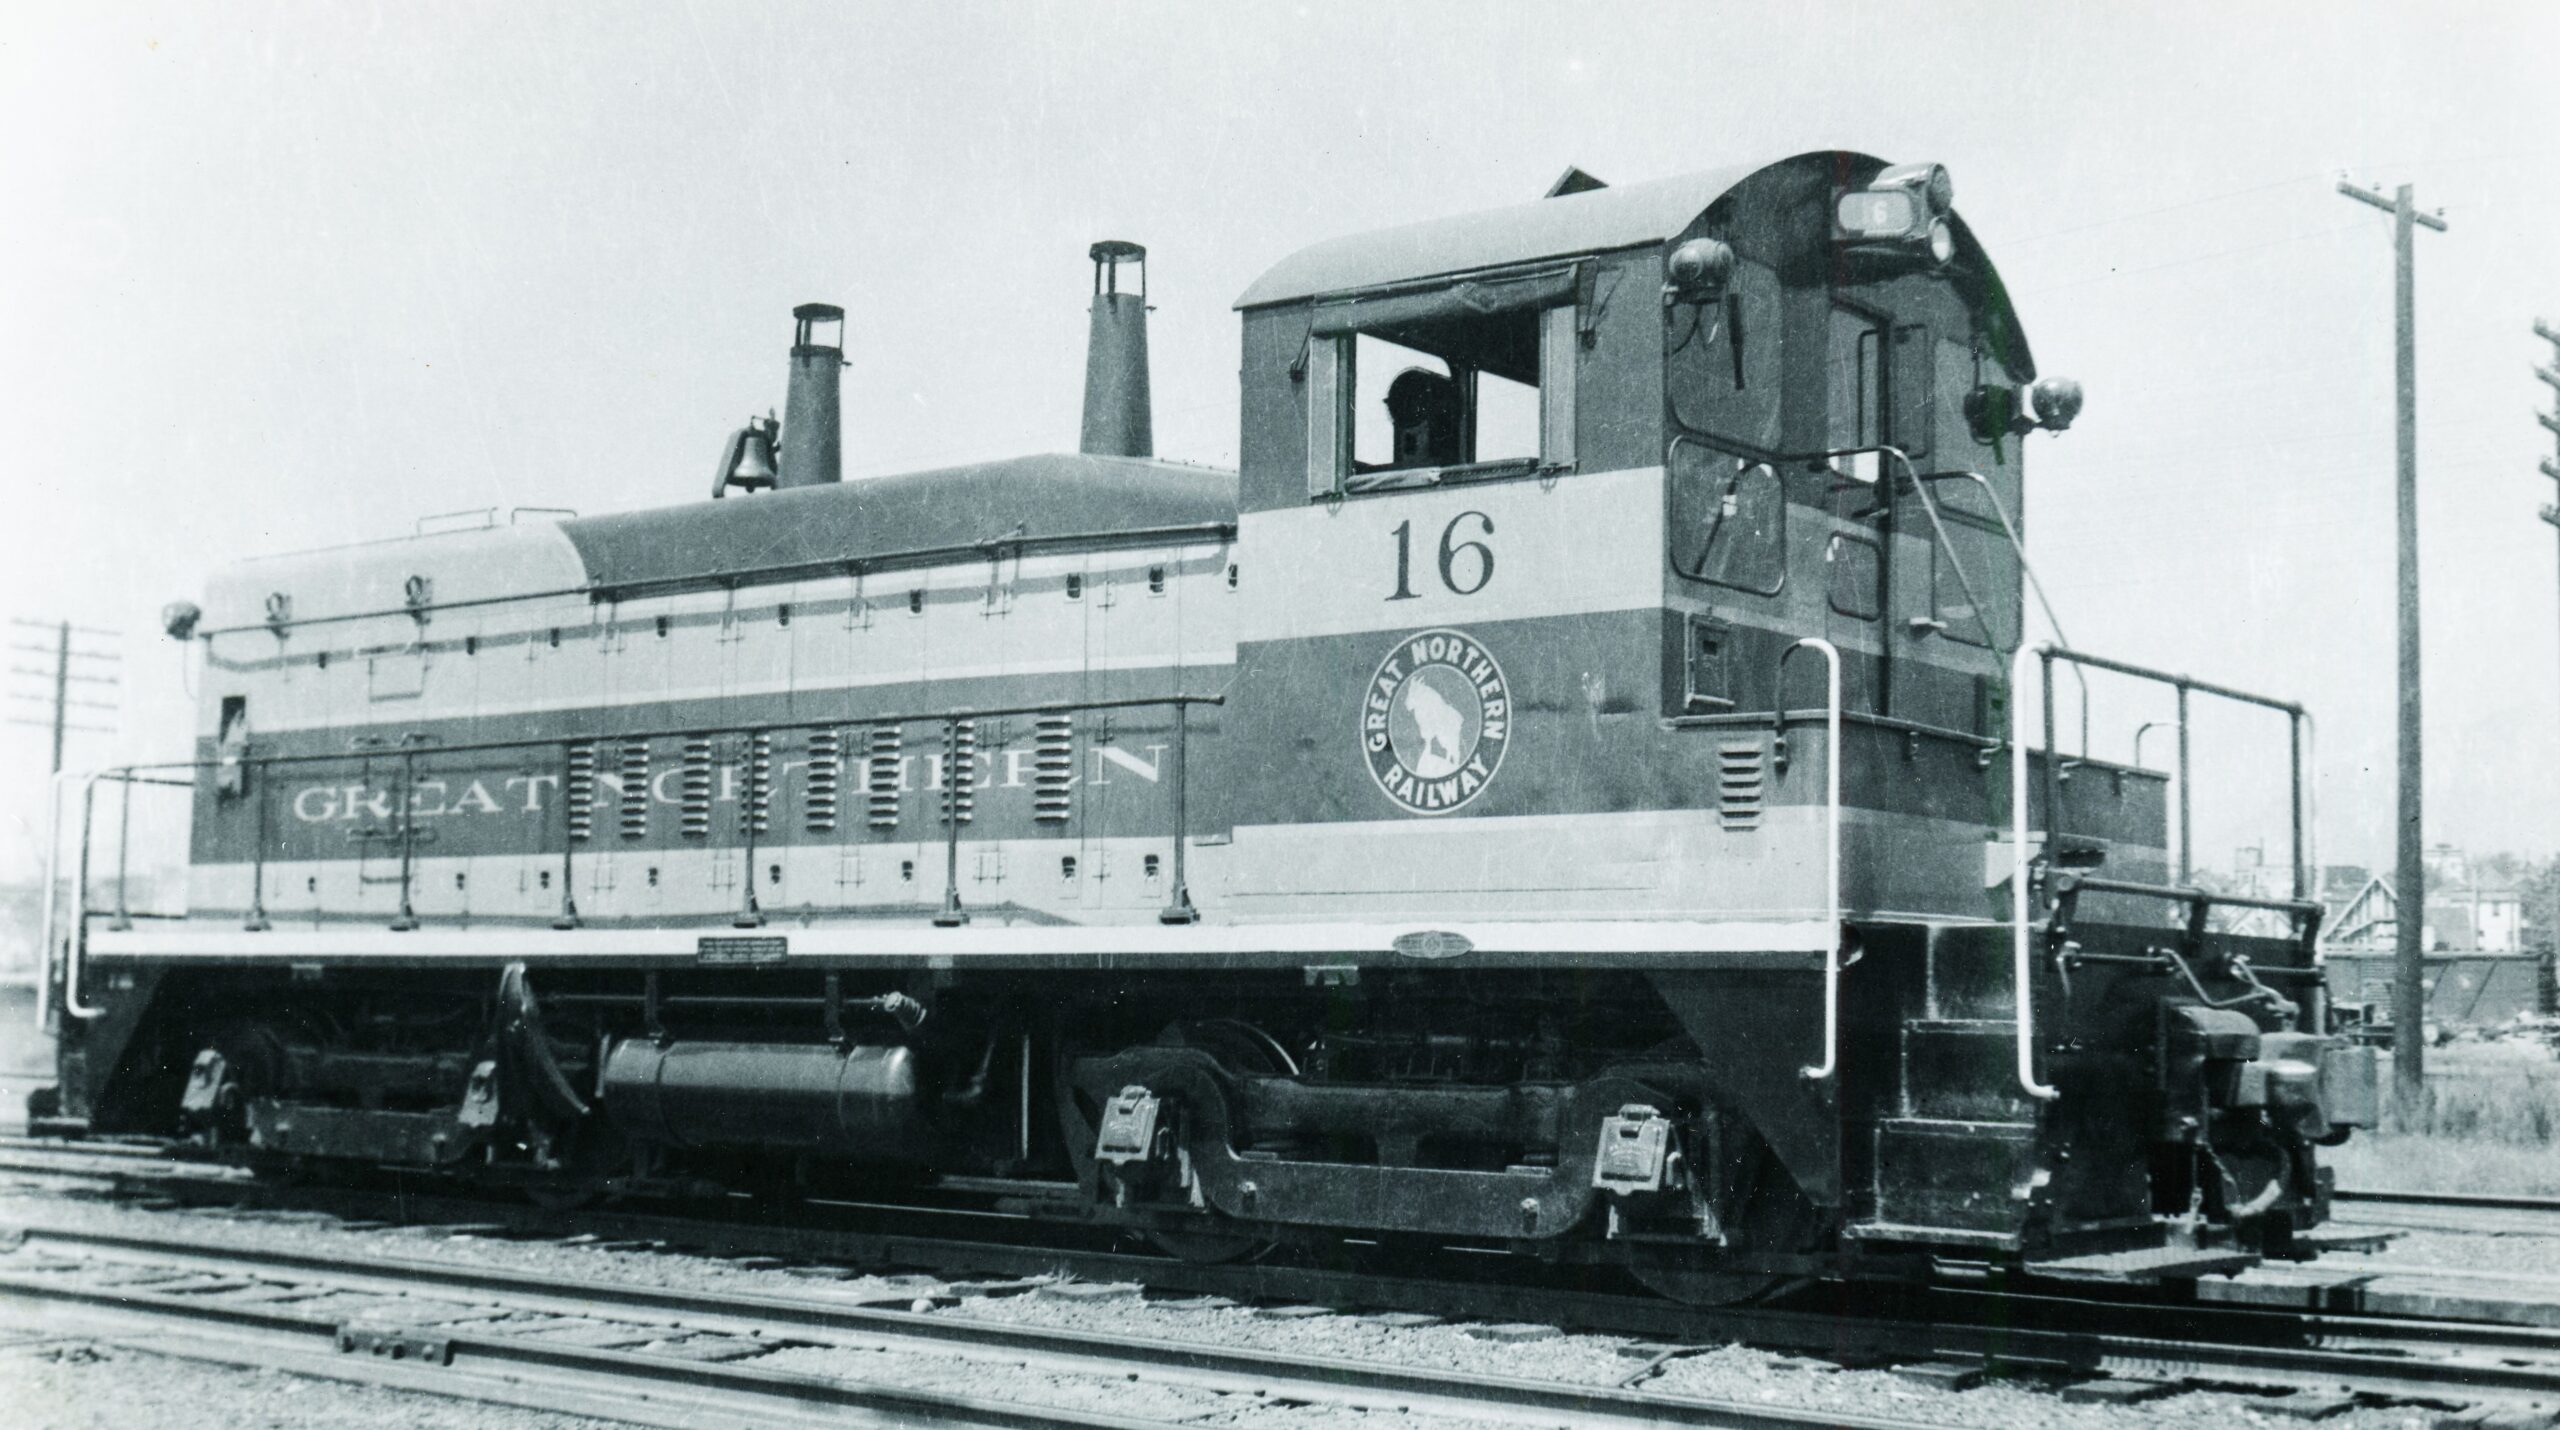 Great Northern | Vancouver, Washington | EMD SW7 16 diesel-electric locomotive | July 1956 | Max Miller Photo